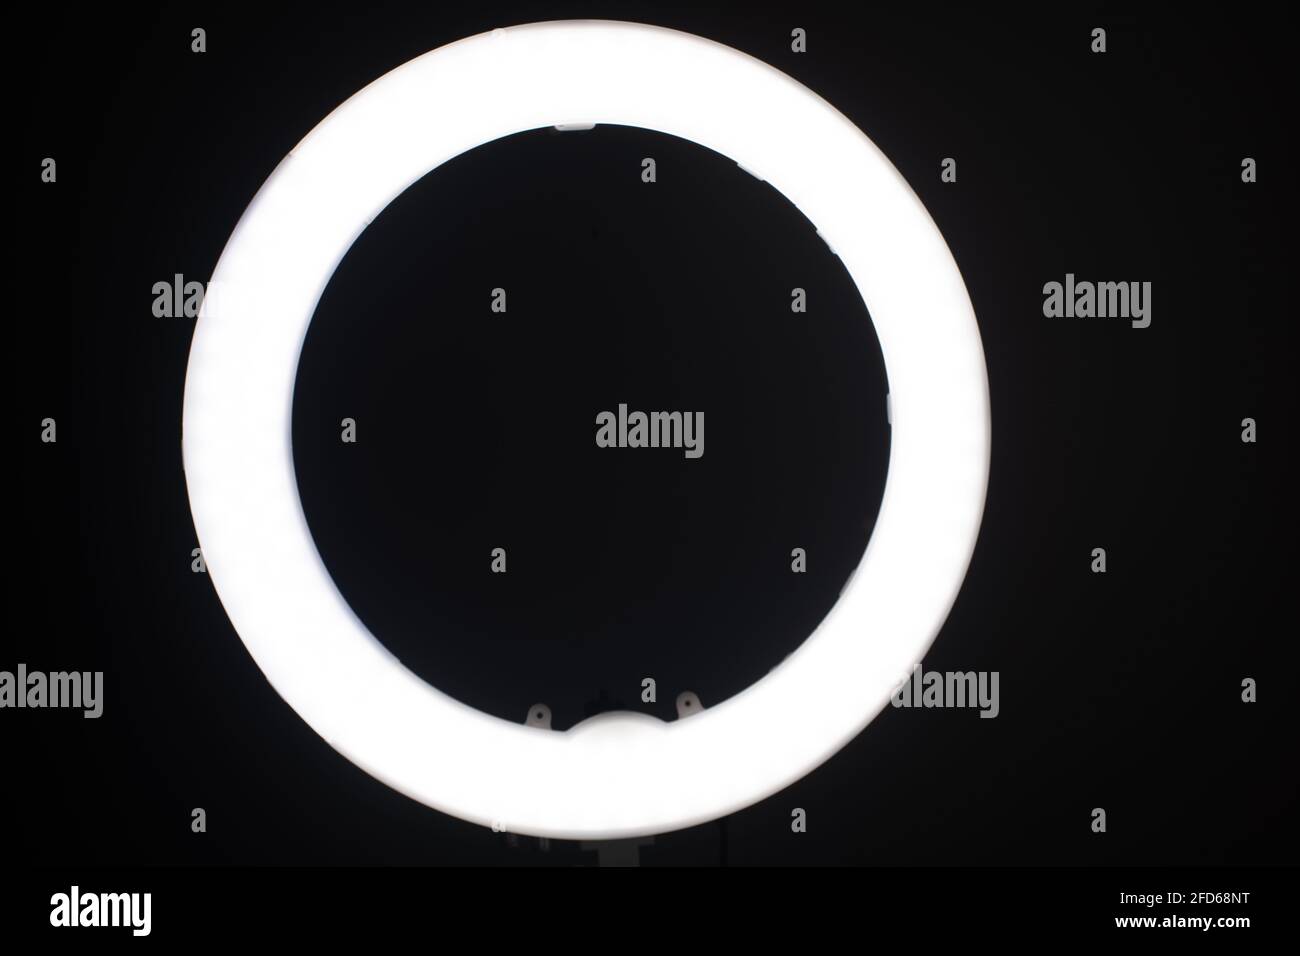 Buy Digitek (DRL 12C) Professional (12 inch) LED Ring Light with Tripod  StOnline Best Prices | Digitek